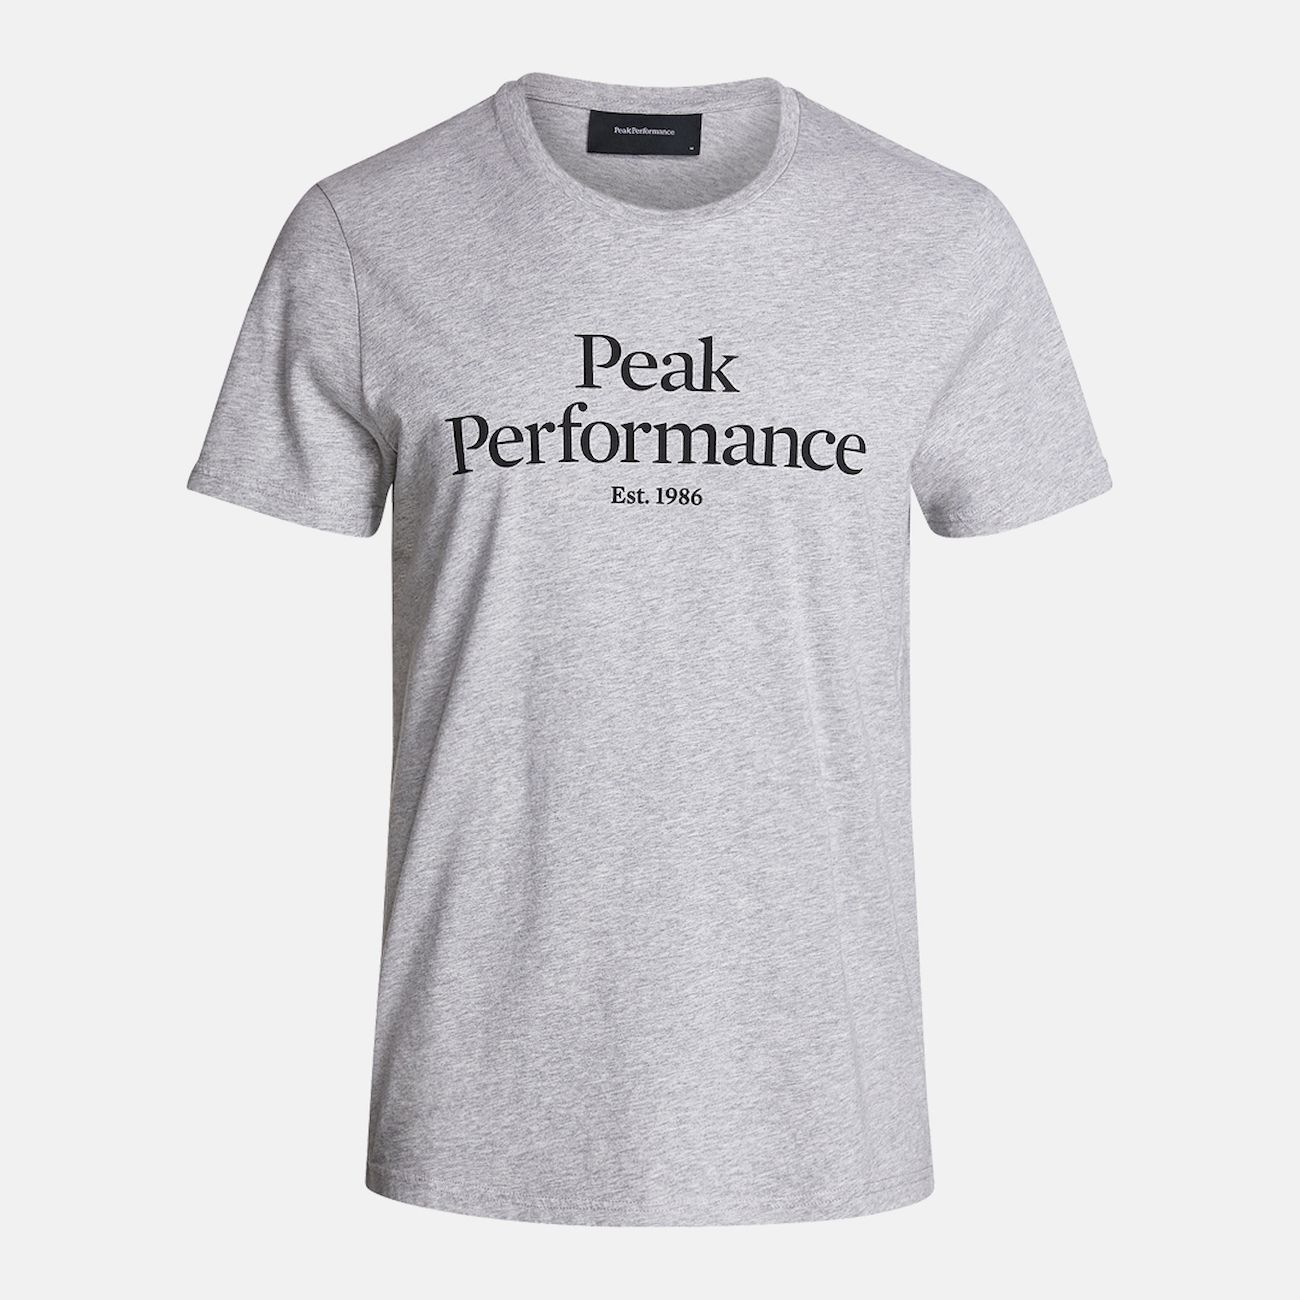 Peak Performance Original Tee - T-shirt - Uomo